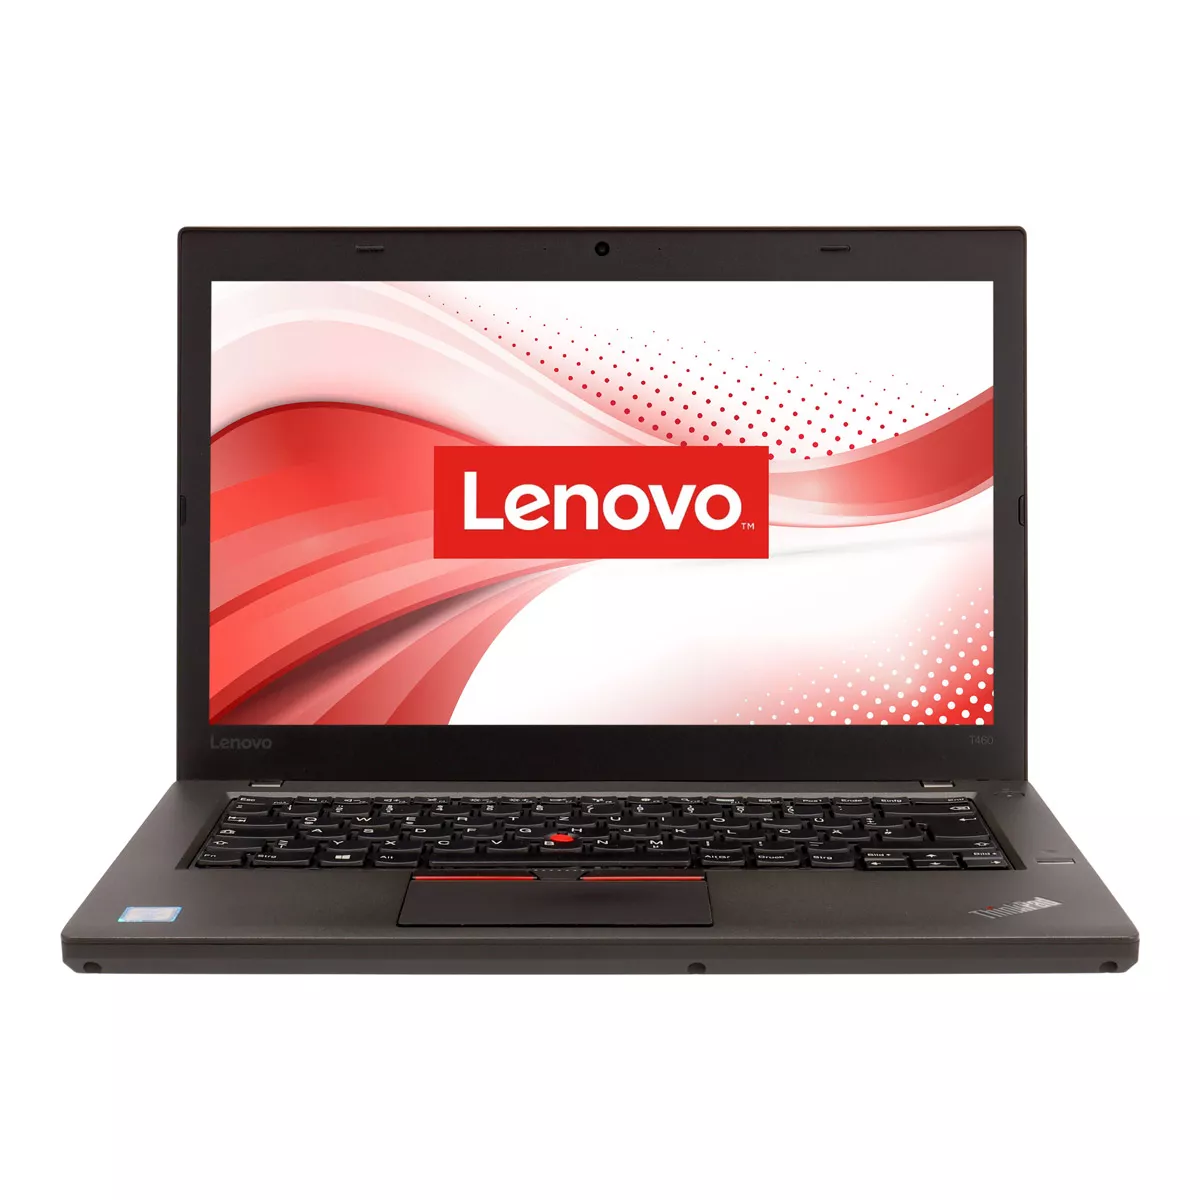 Lenovo ThinkPad T460 Core i5 6300U 2,40 GHz 240 GB SSD Touchscreen Webcam A